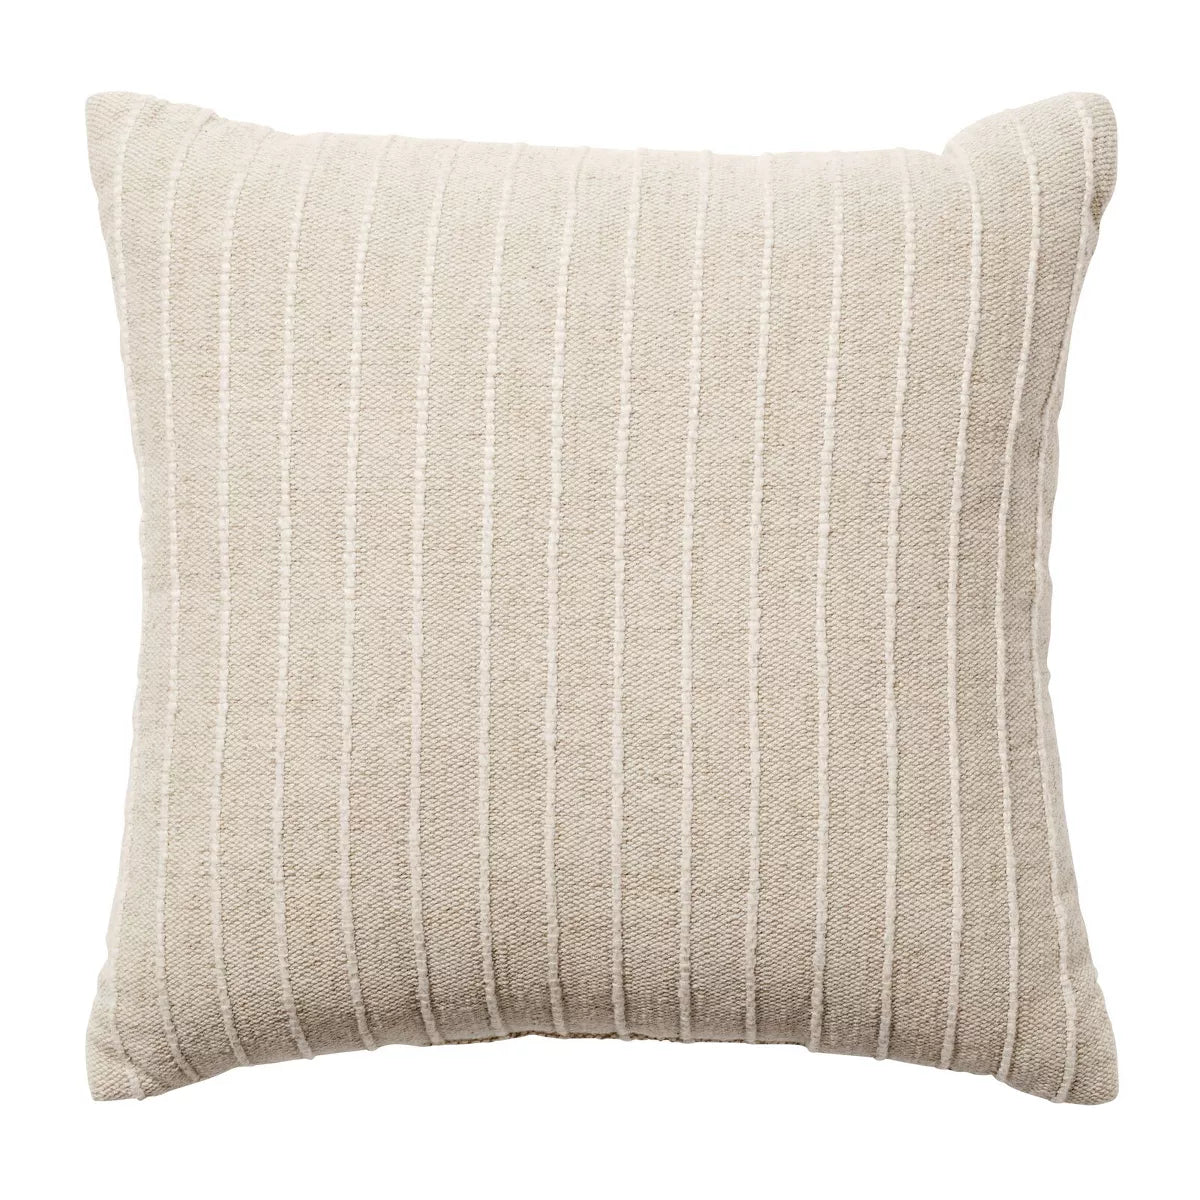 Nate Home by Nate Berkus Textured Decorative Pillow